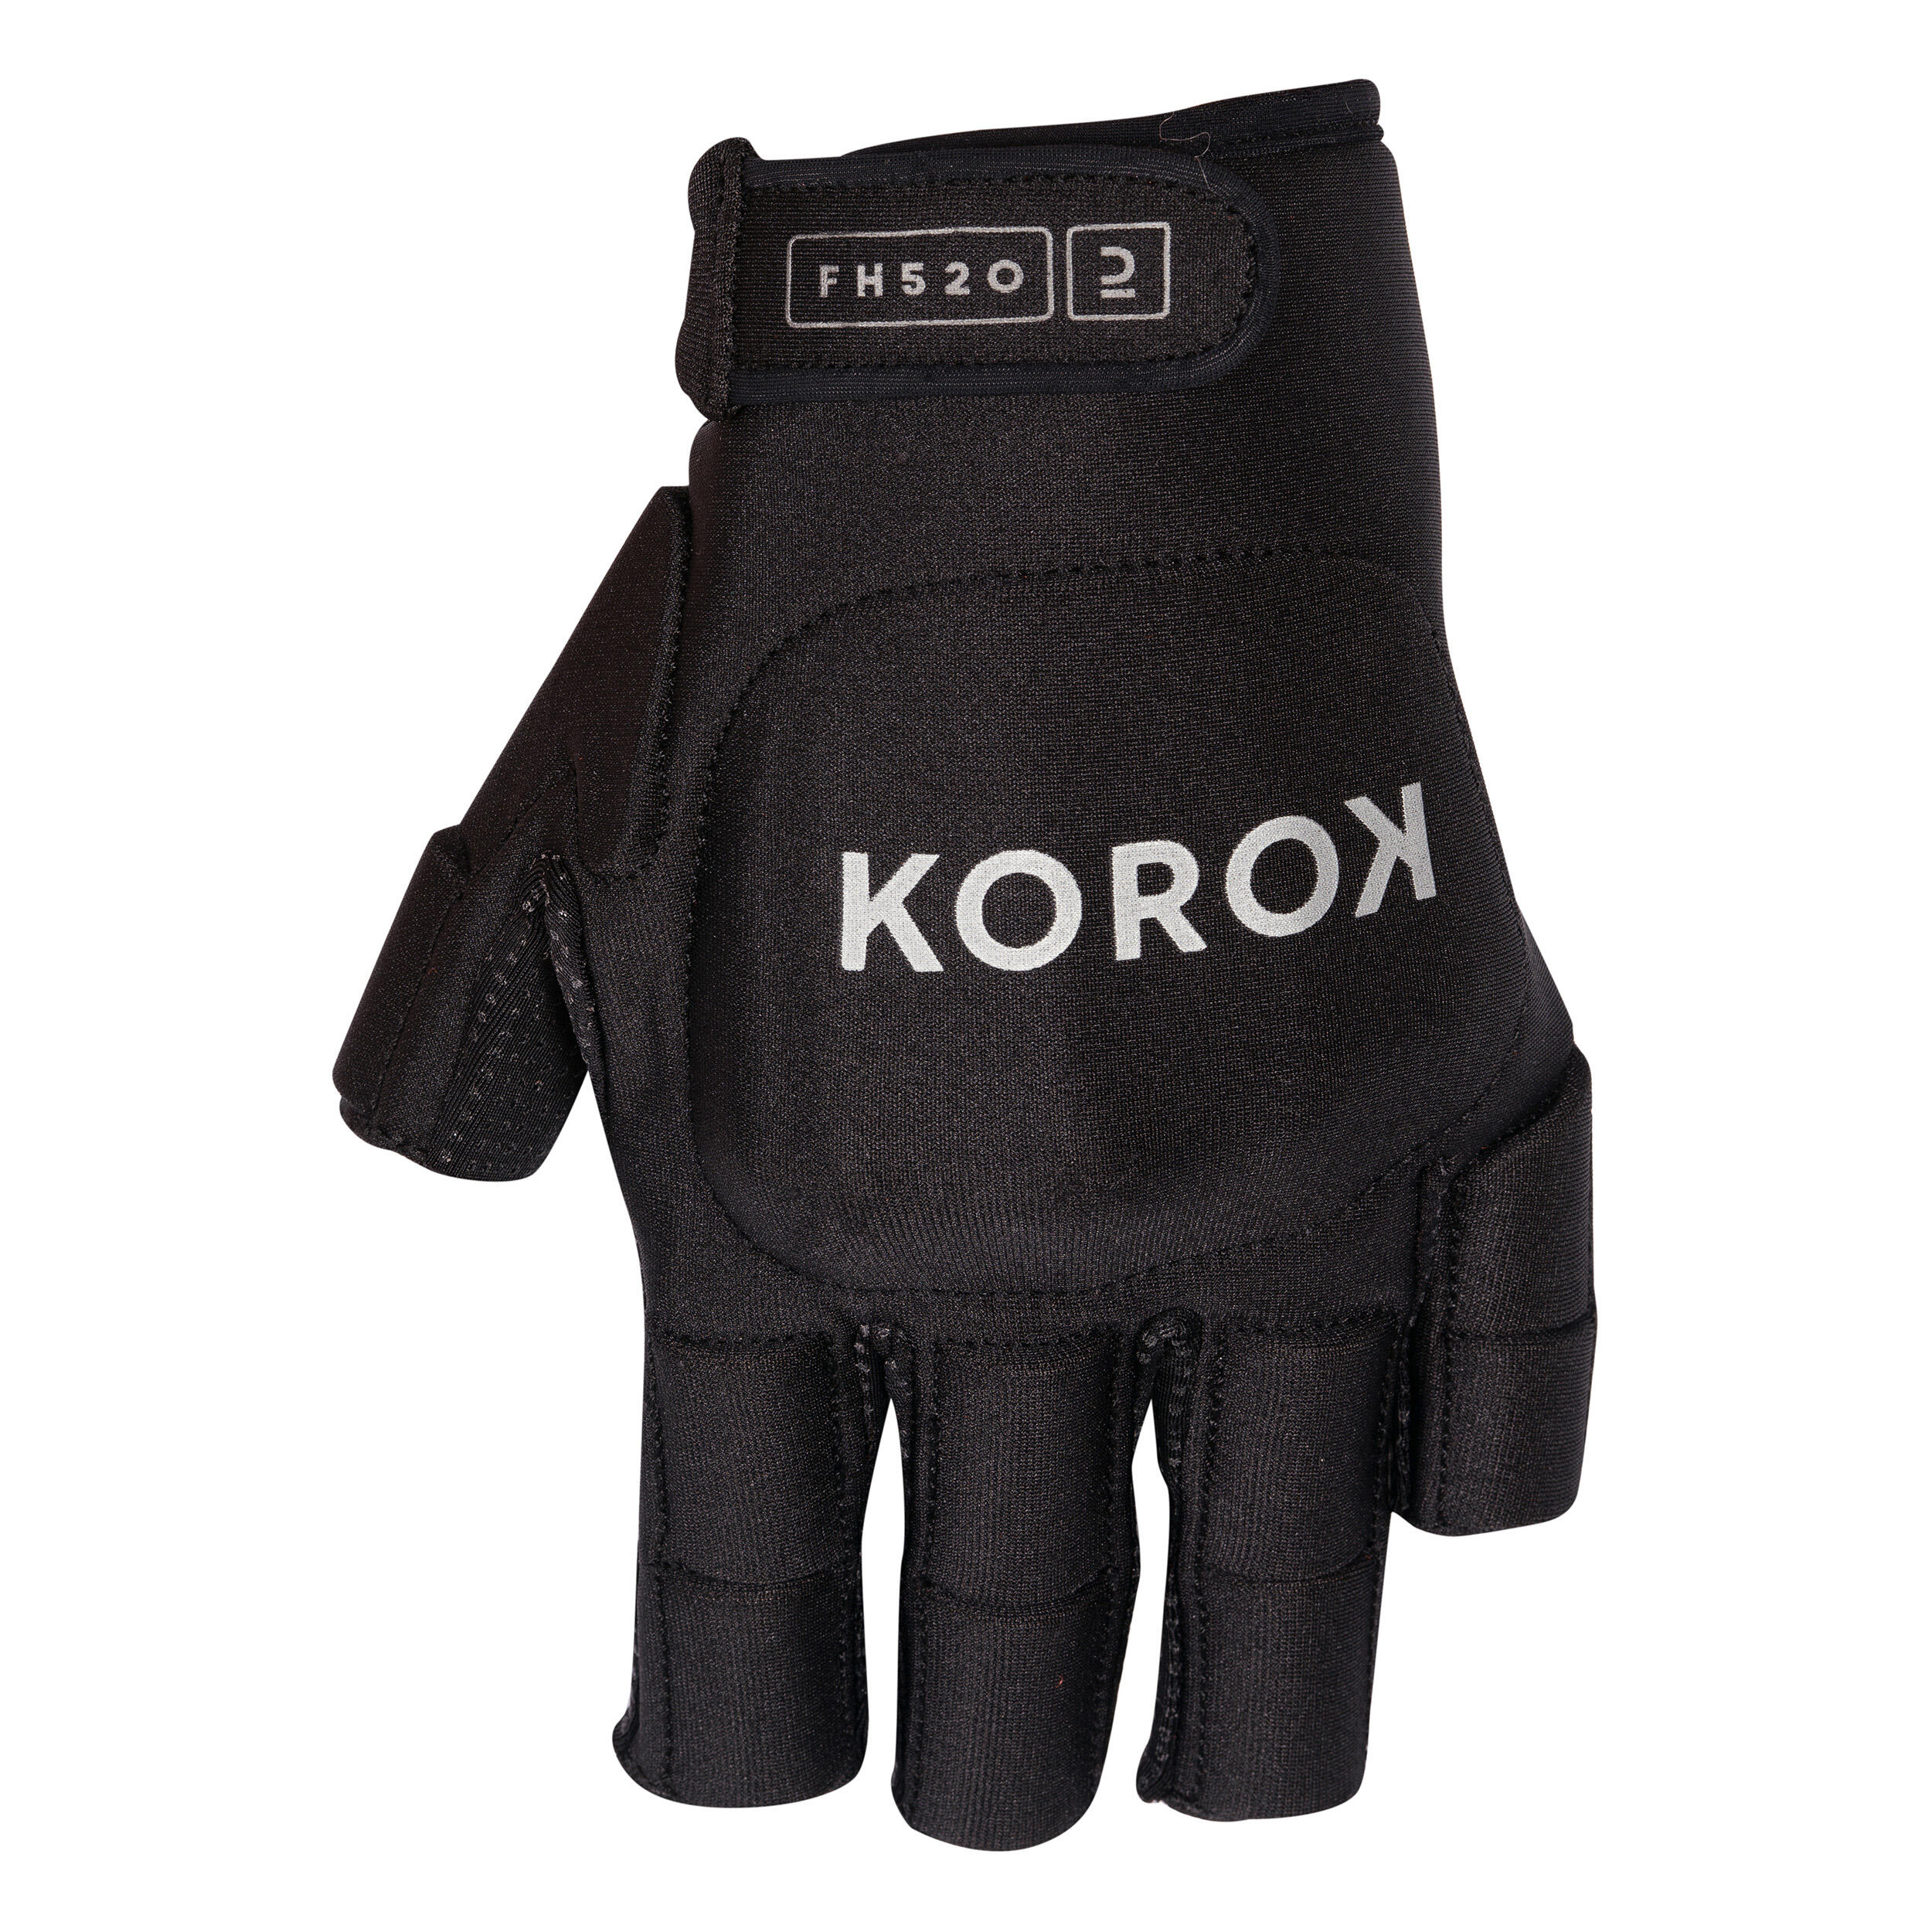 KOROK Kids'/Adult Mid/High Intensity 2 Knuckle Field Hockey Glove FH520 - Black/Grey